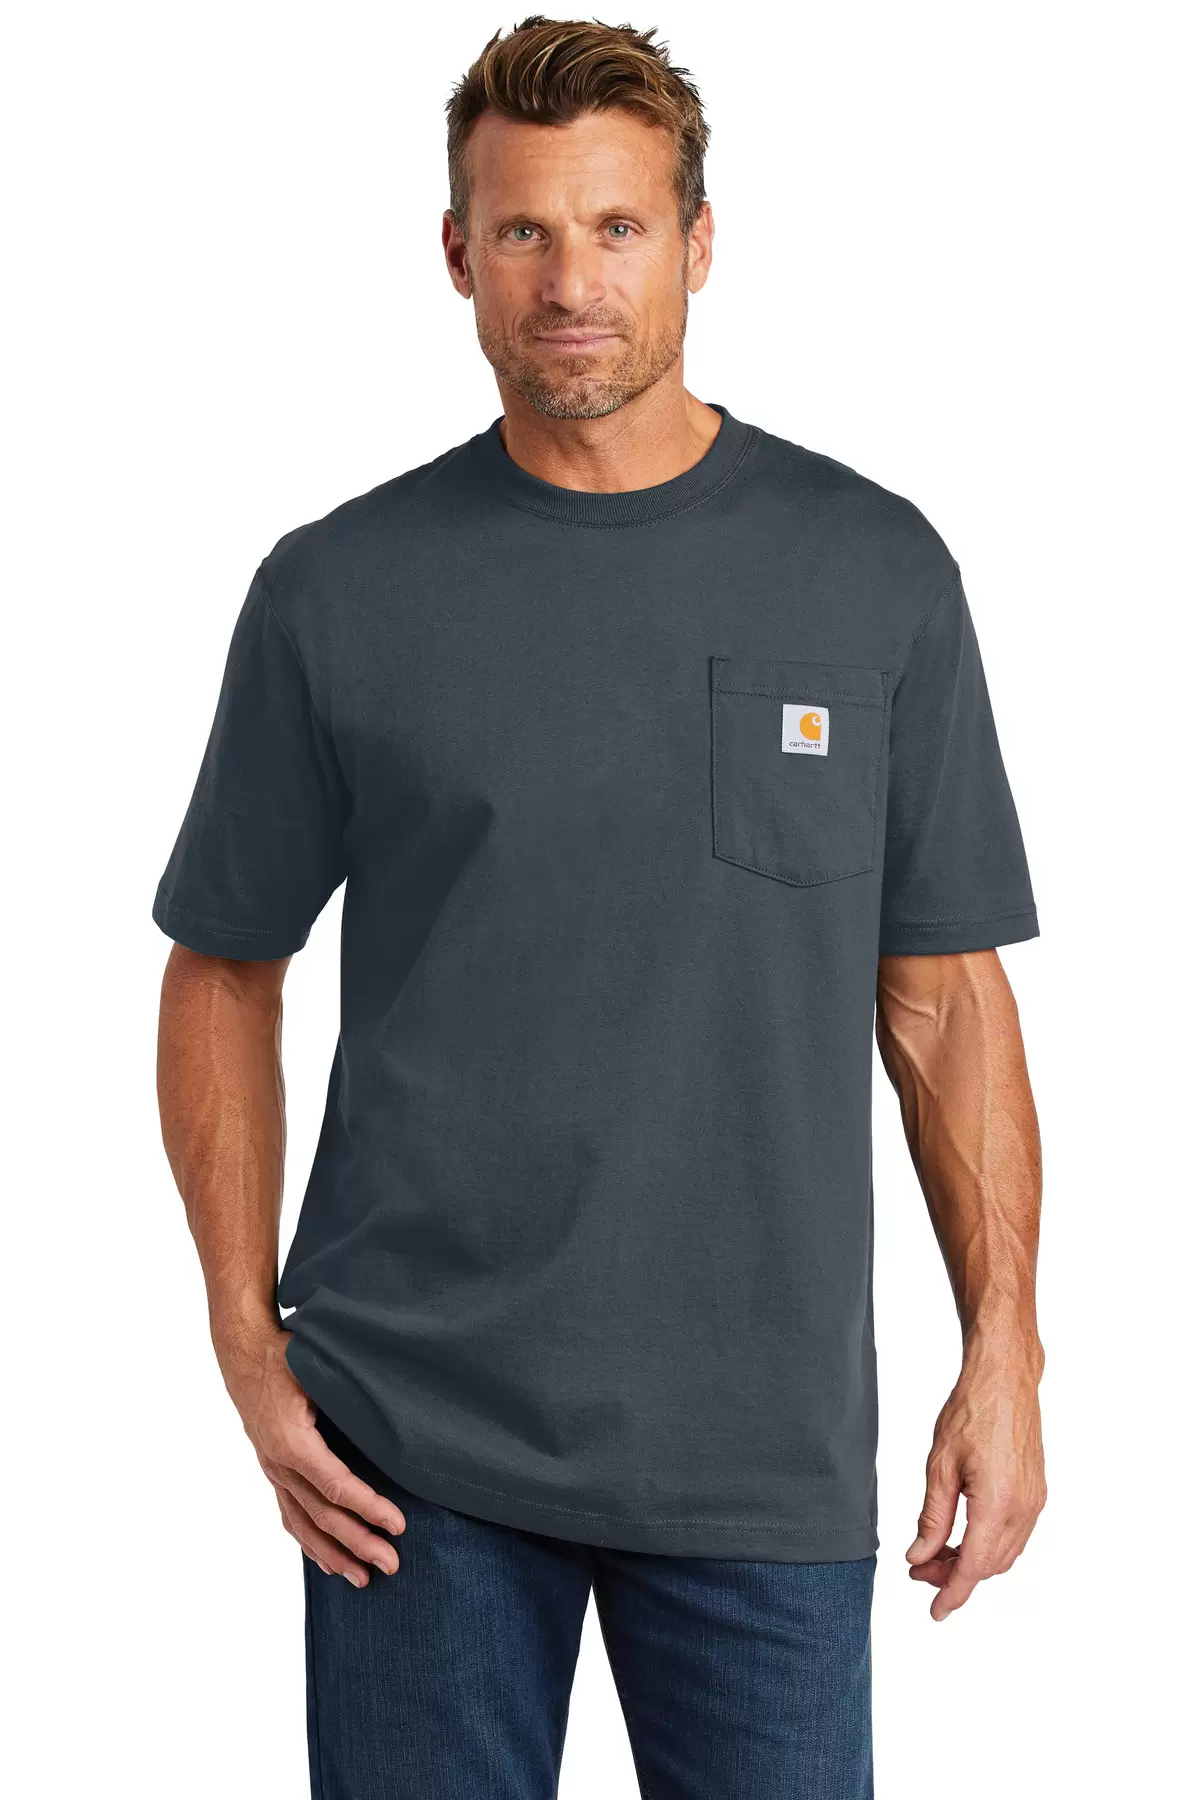 CARHARTT K87 Carhartt Workwear Pocket Short Sleeve T-Shirt